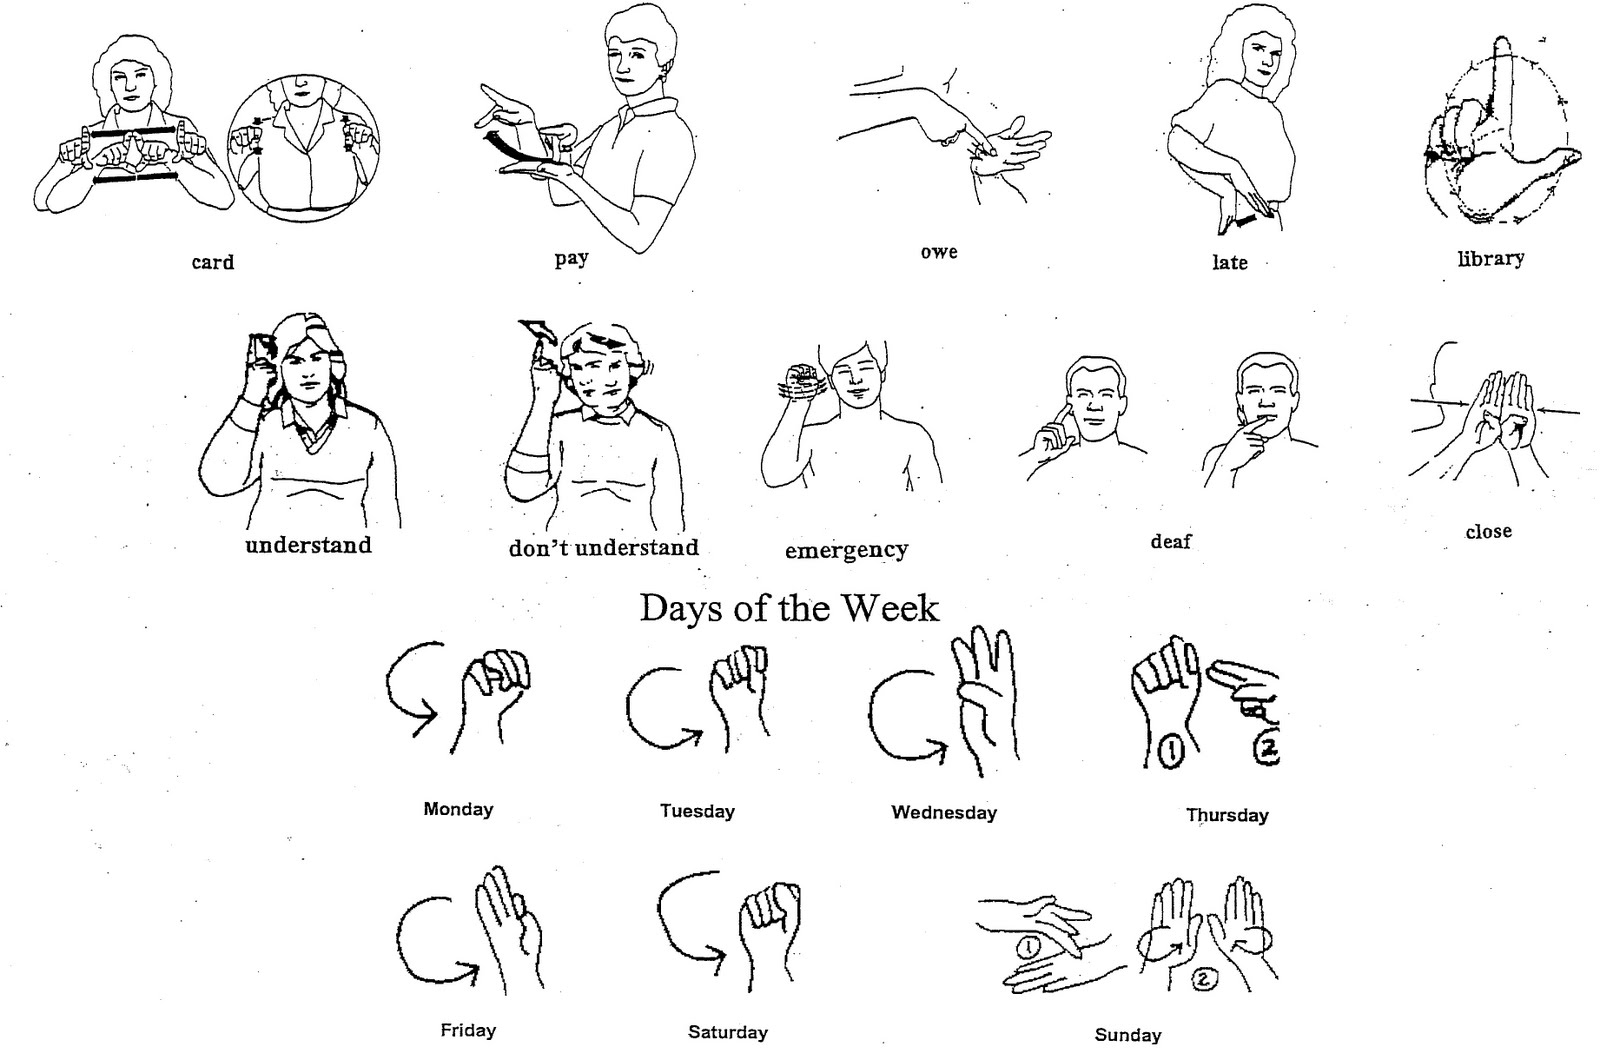 ASL Sign Language Words Printable